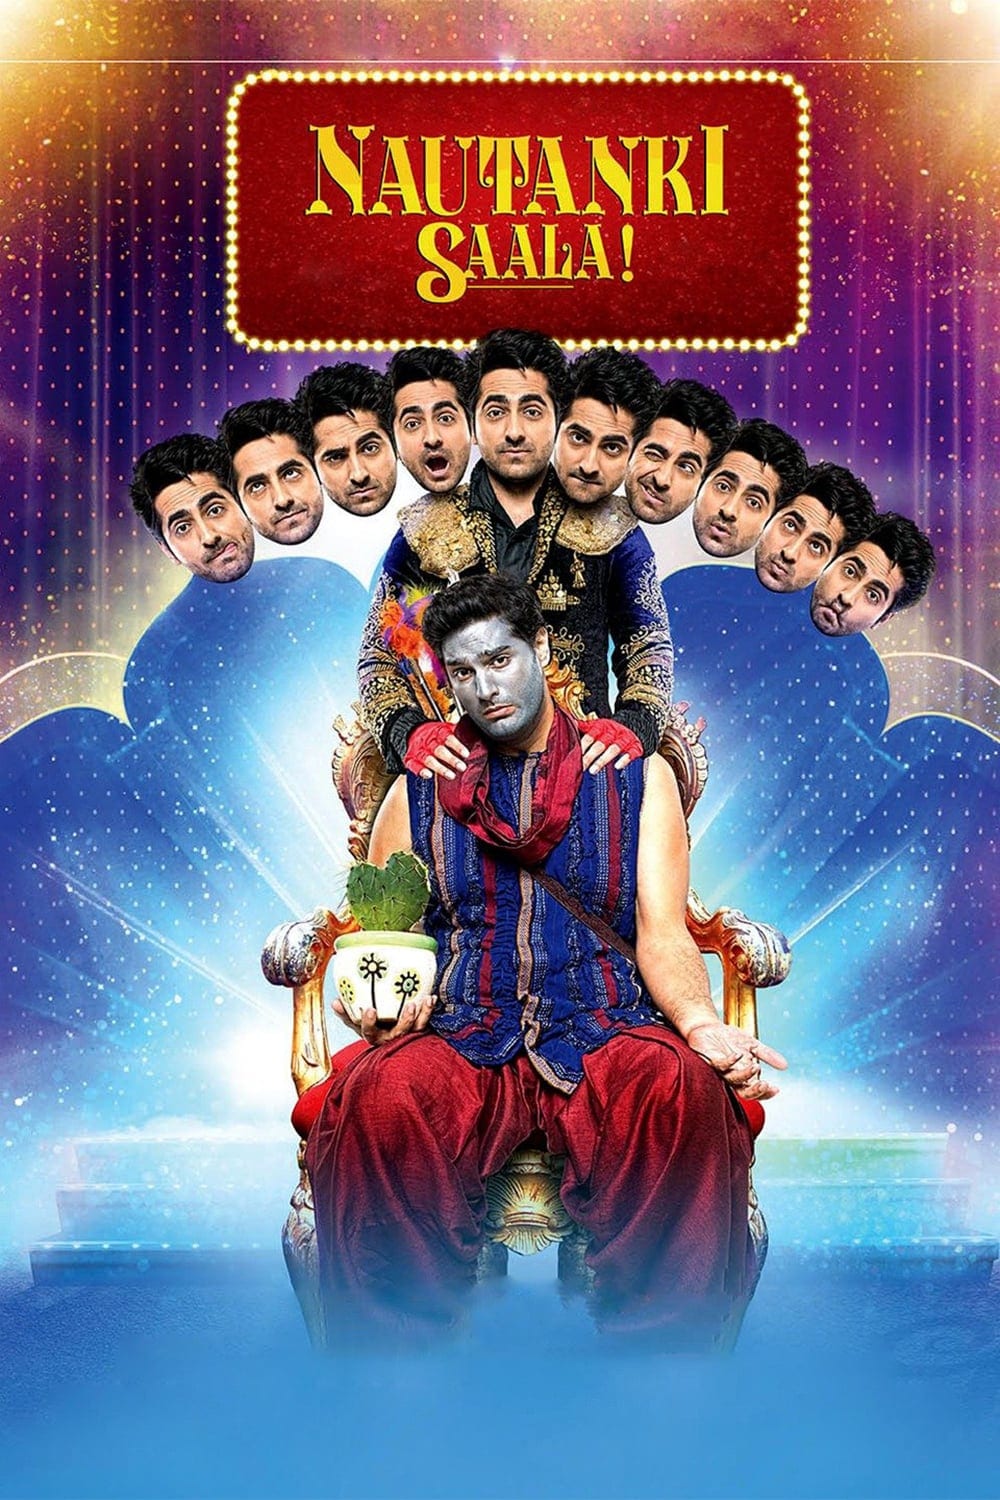 Poster for the movie "Nautanki Saala!"